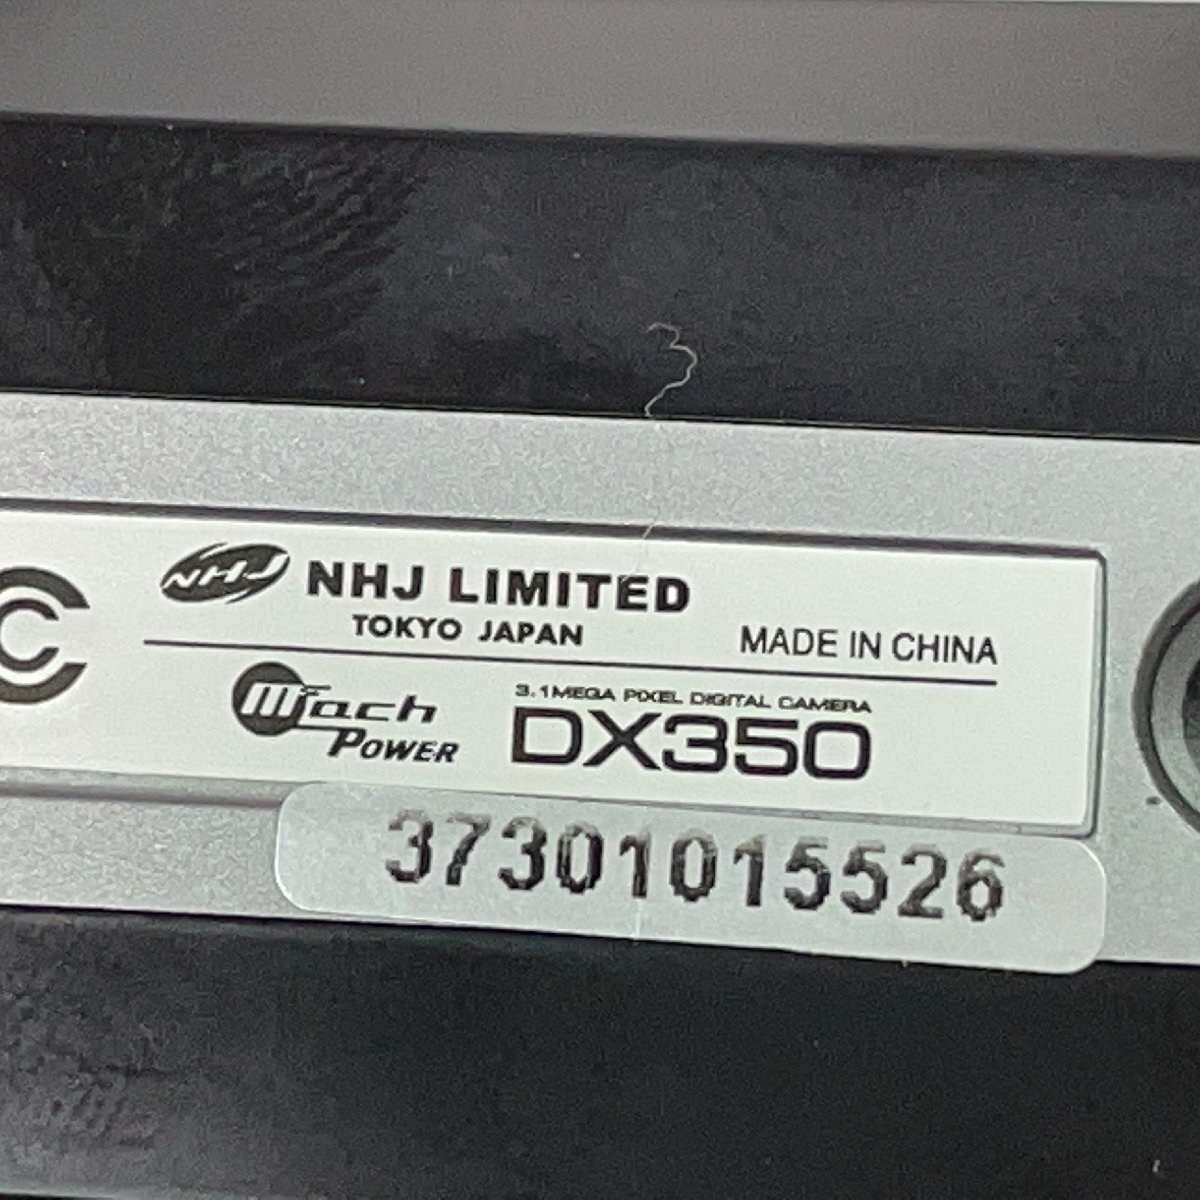 m002 F2(30) 6 NHJ LIMITED Mach Power DX350 コンパクトデジタルカメラ デジカメ ジャンク品扱い 現状 動作未確認_画像6